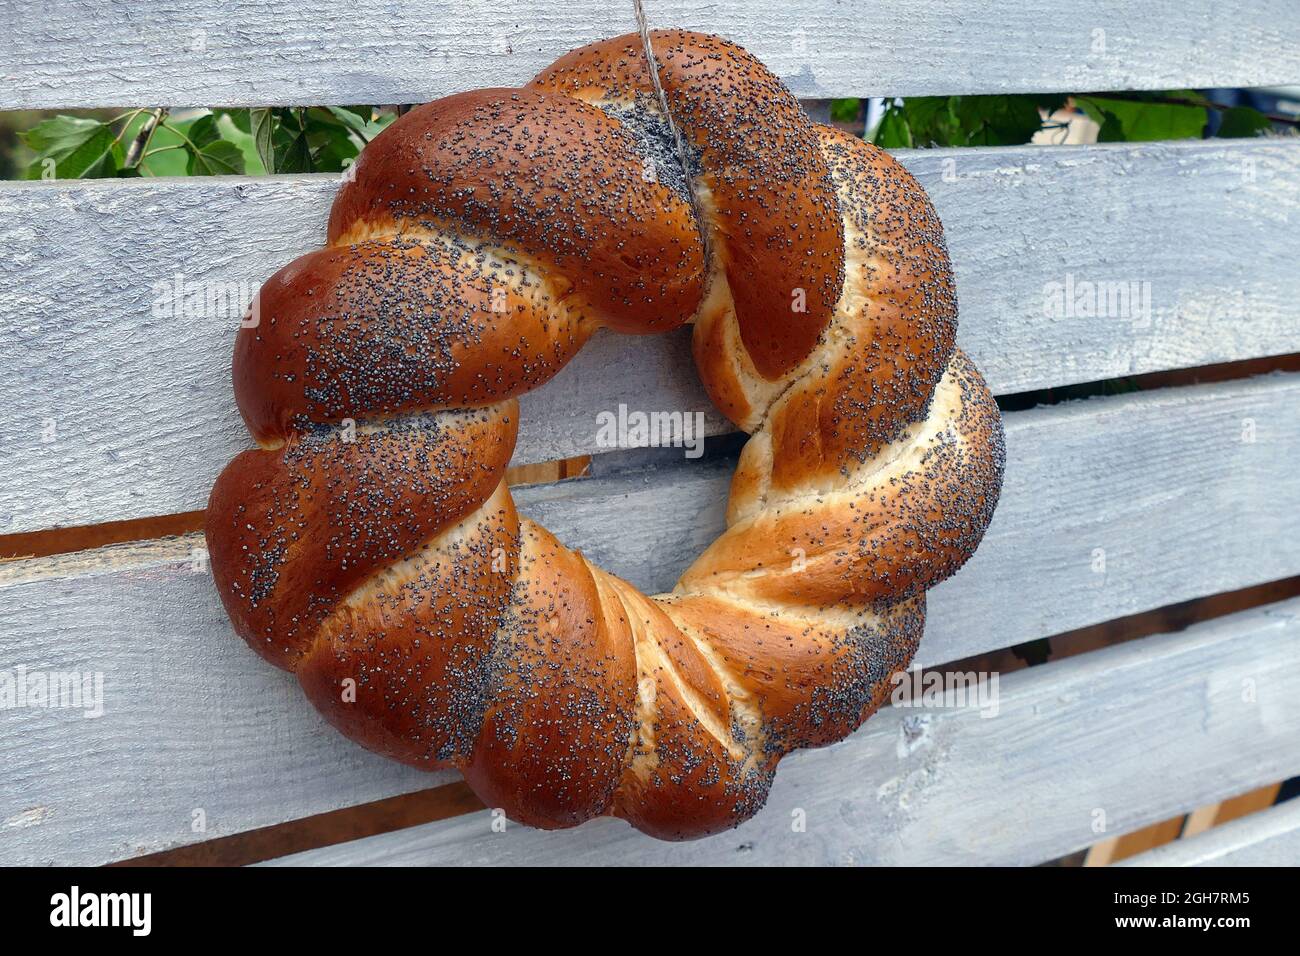 IVANO-FRANKIVSK, UKRAINE - SEPTEMBER 5, 2021 - A kolach (ring-shaped bread) is pictured during the Bread Festival 2021 in Ivano-Frankivsk, western Ukr Stock Photo